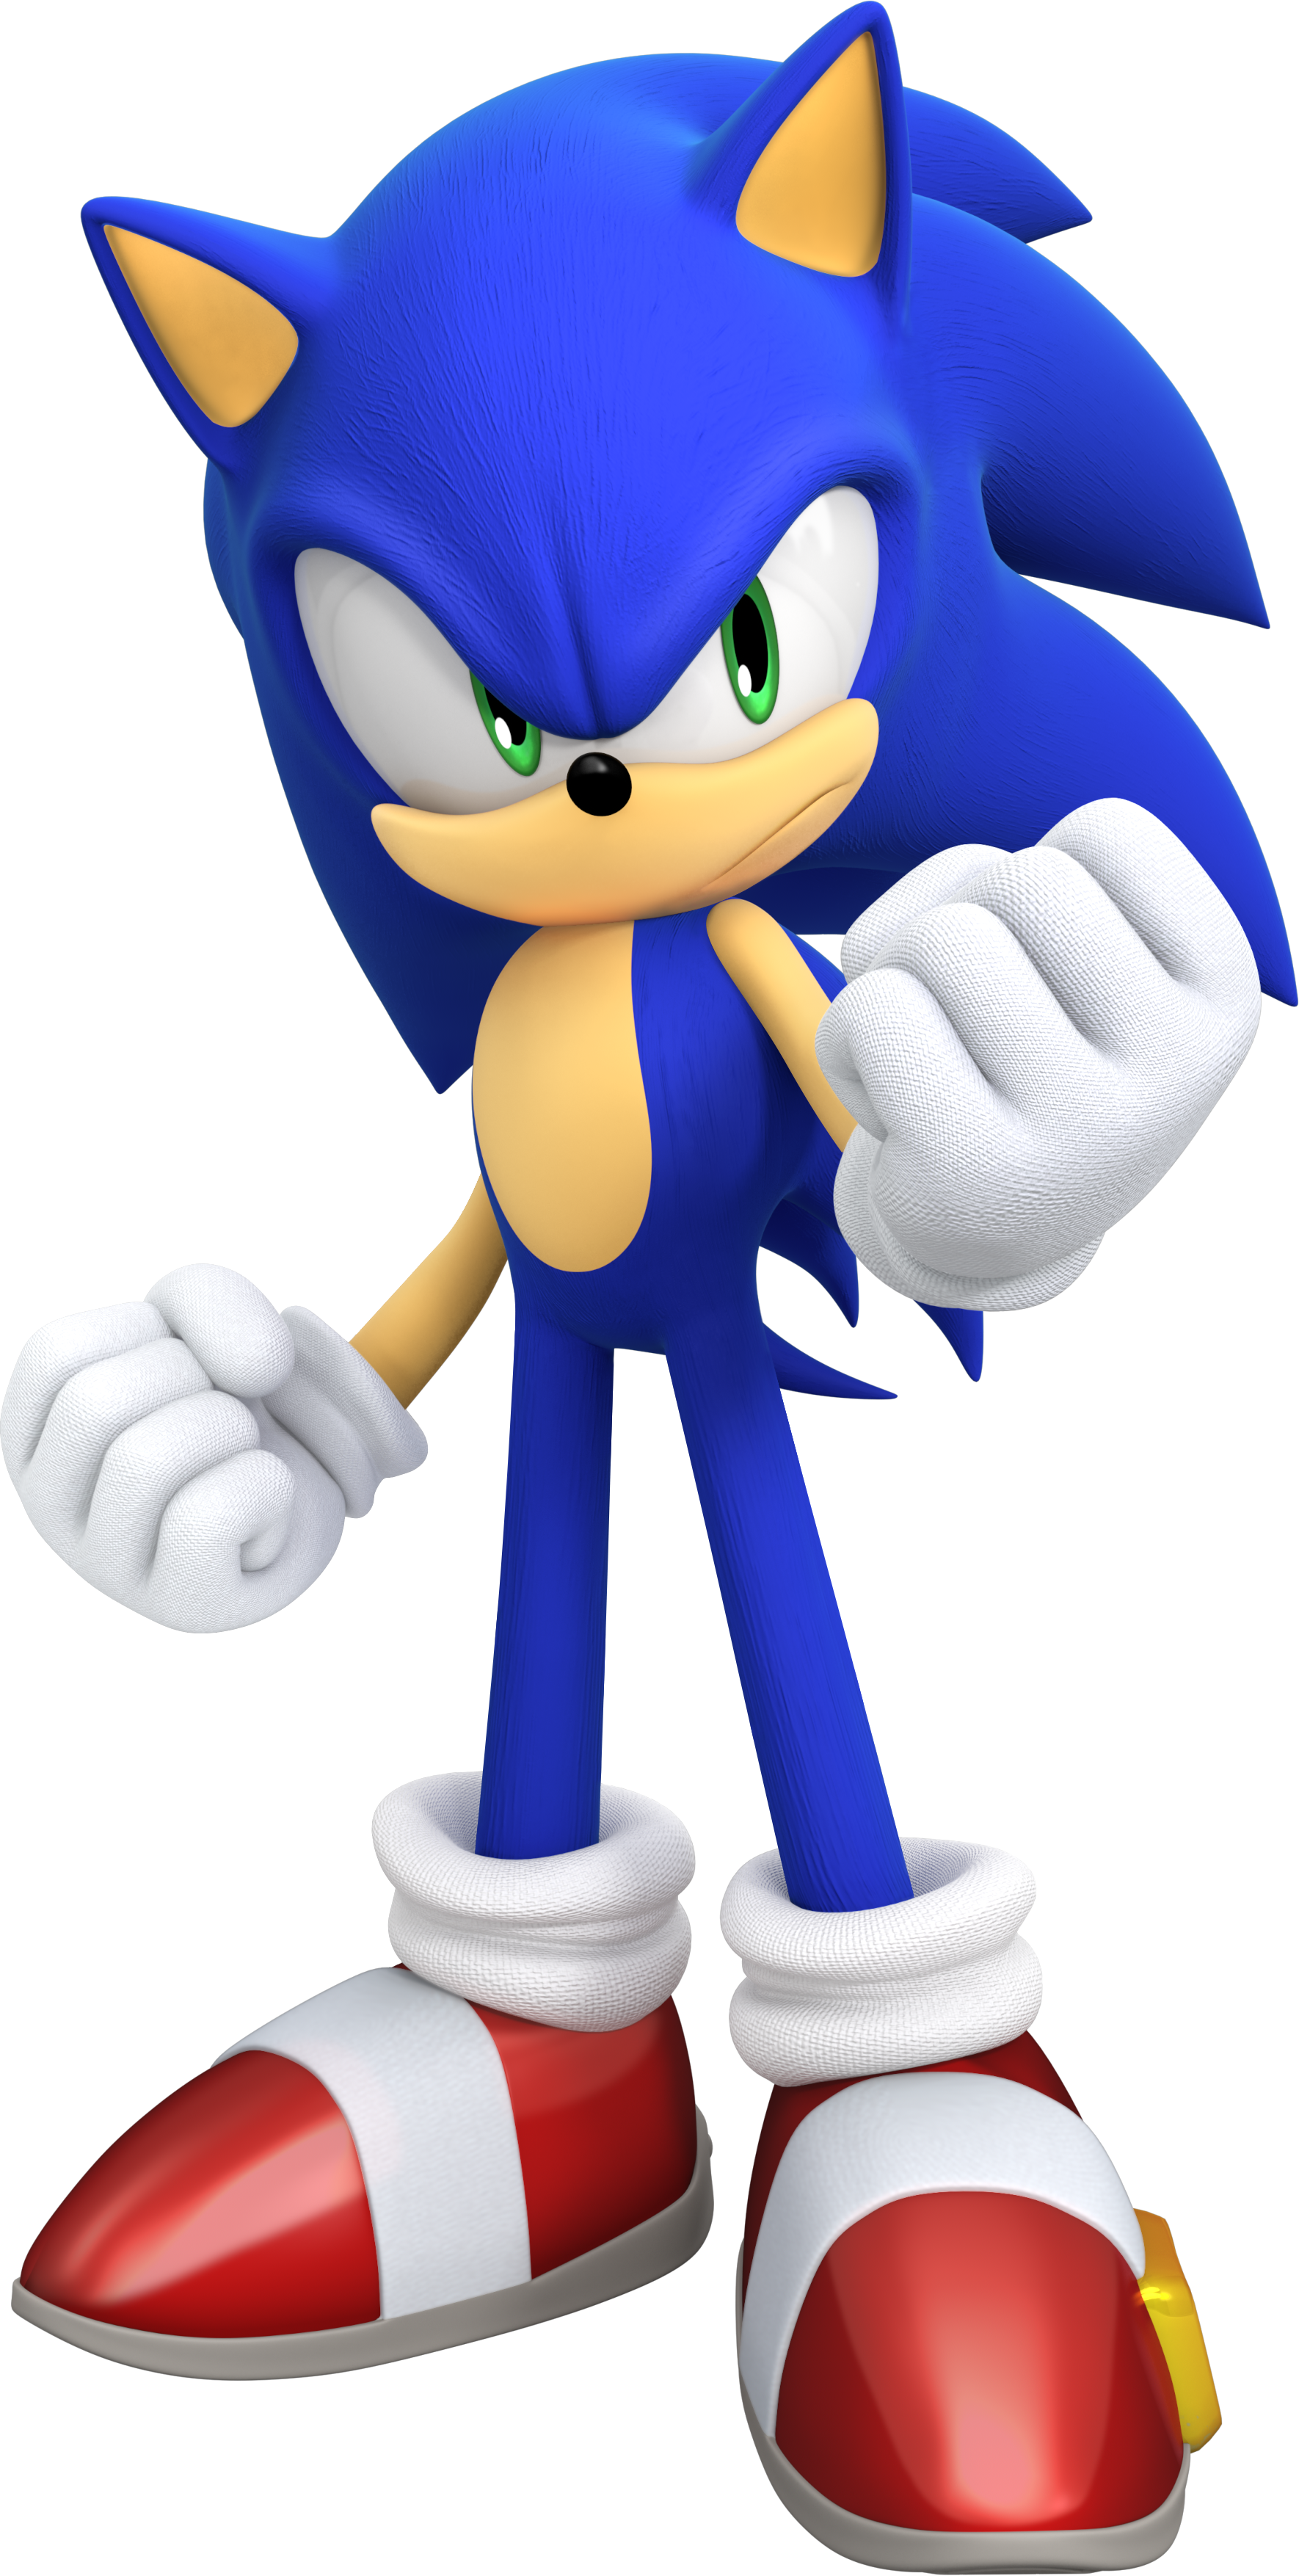 07, March 7, 2018 - Sonic Super Smash Bros (635x1259)